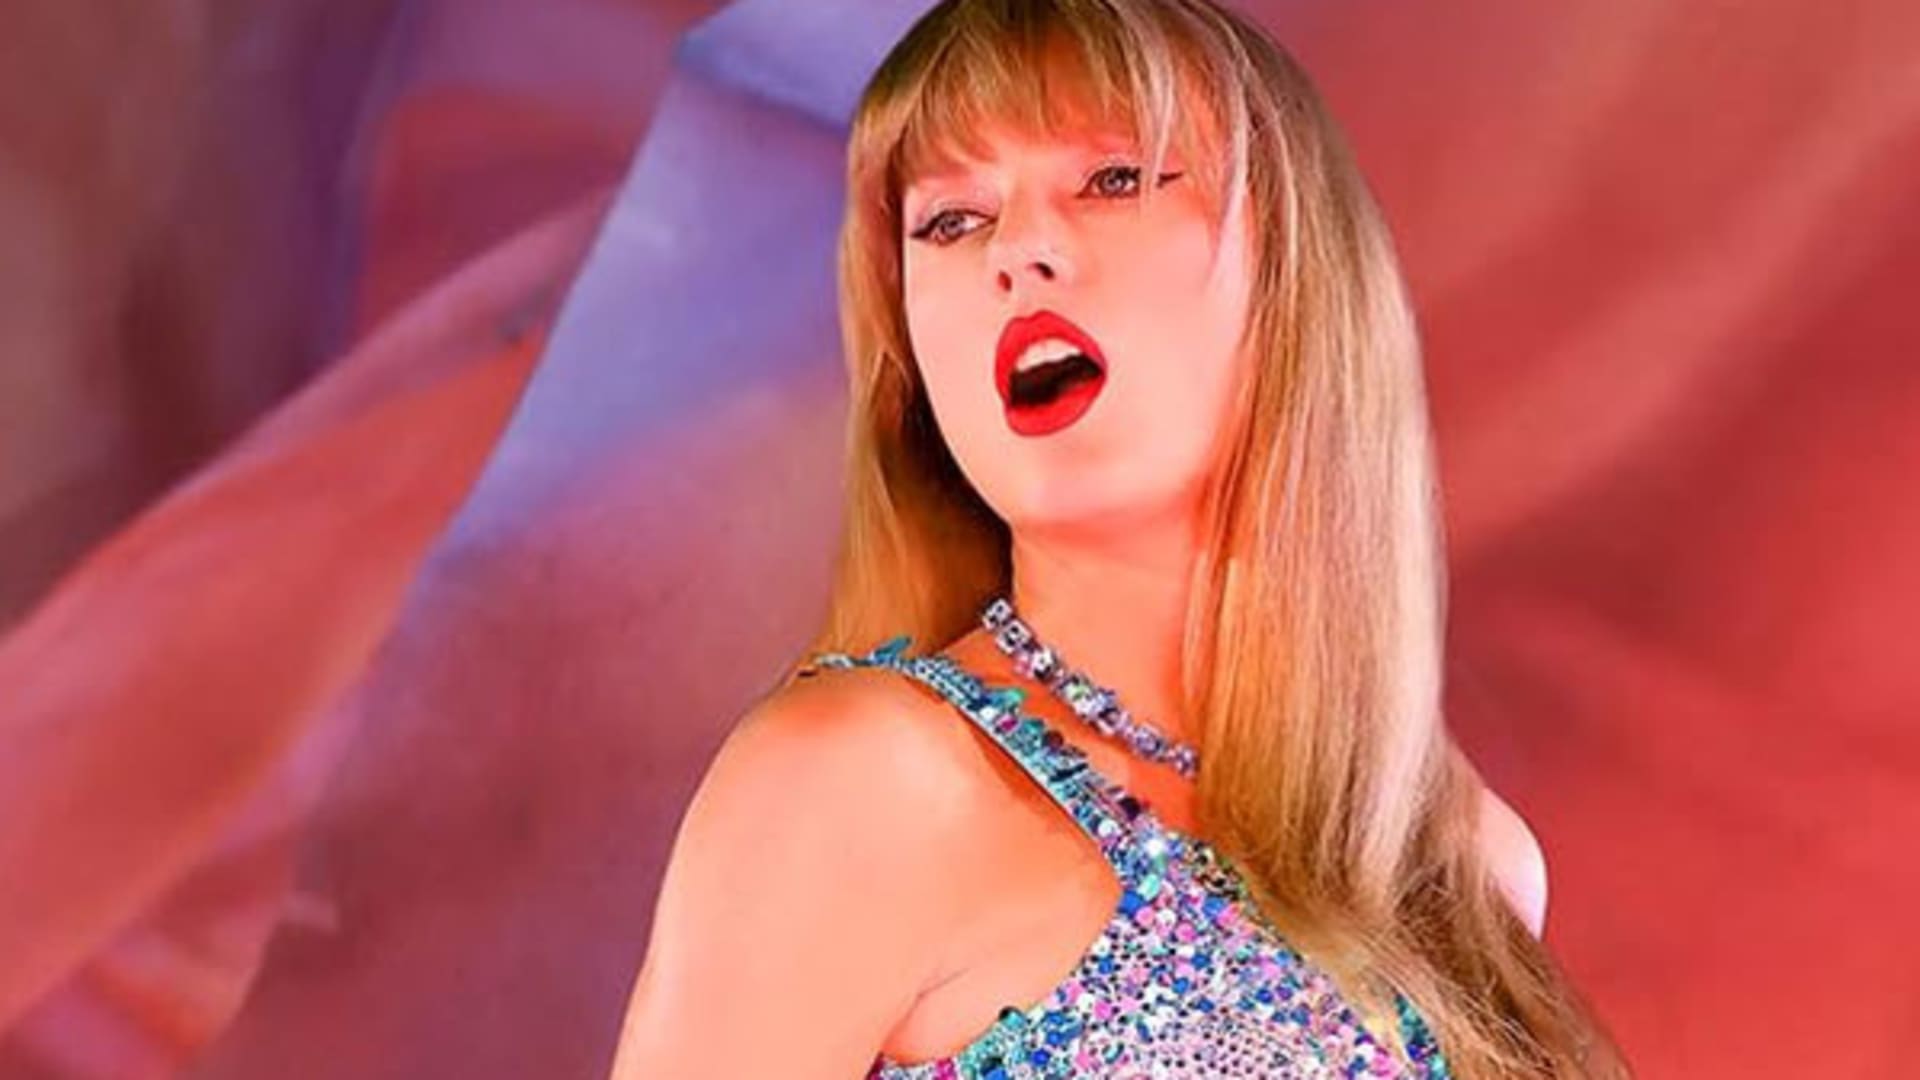 Taylor Swift Eras Tour film surpasses $100 million in ticket sales